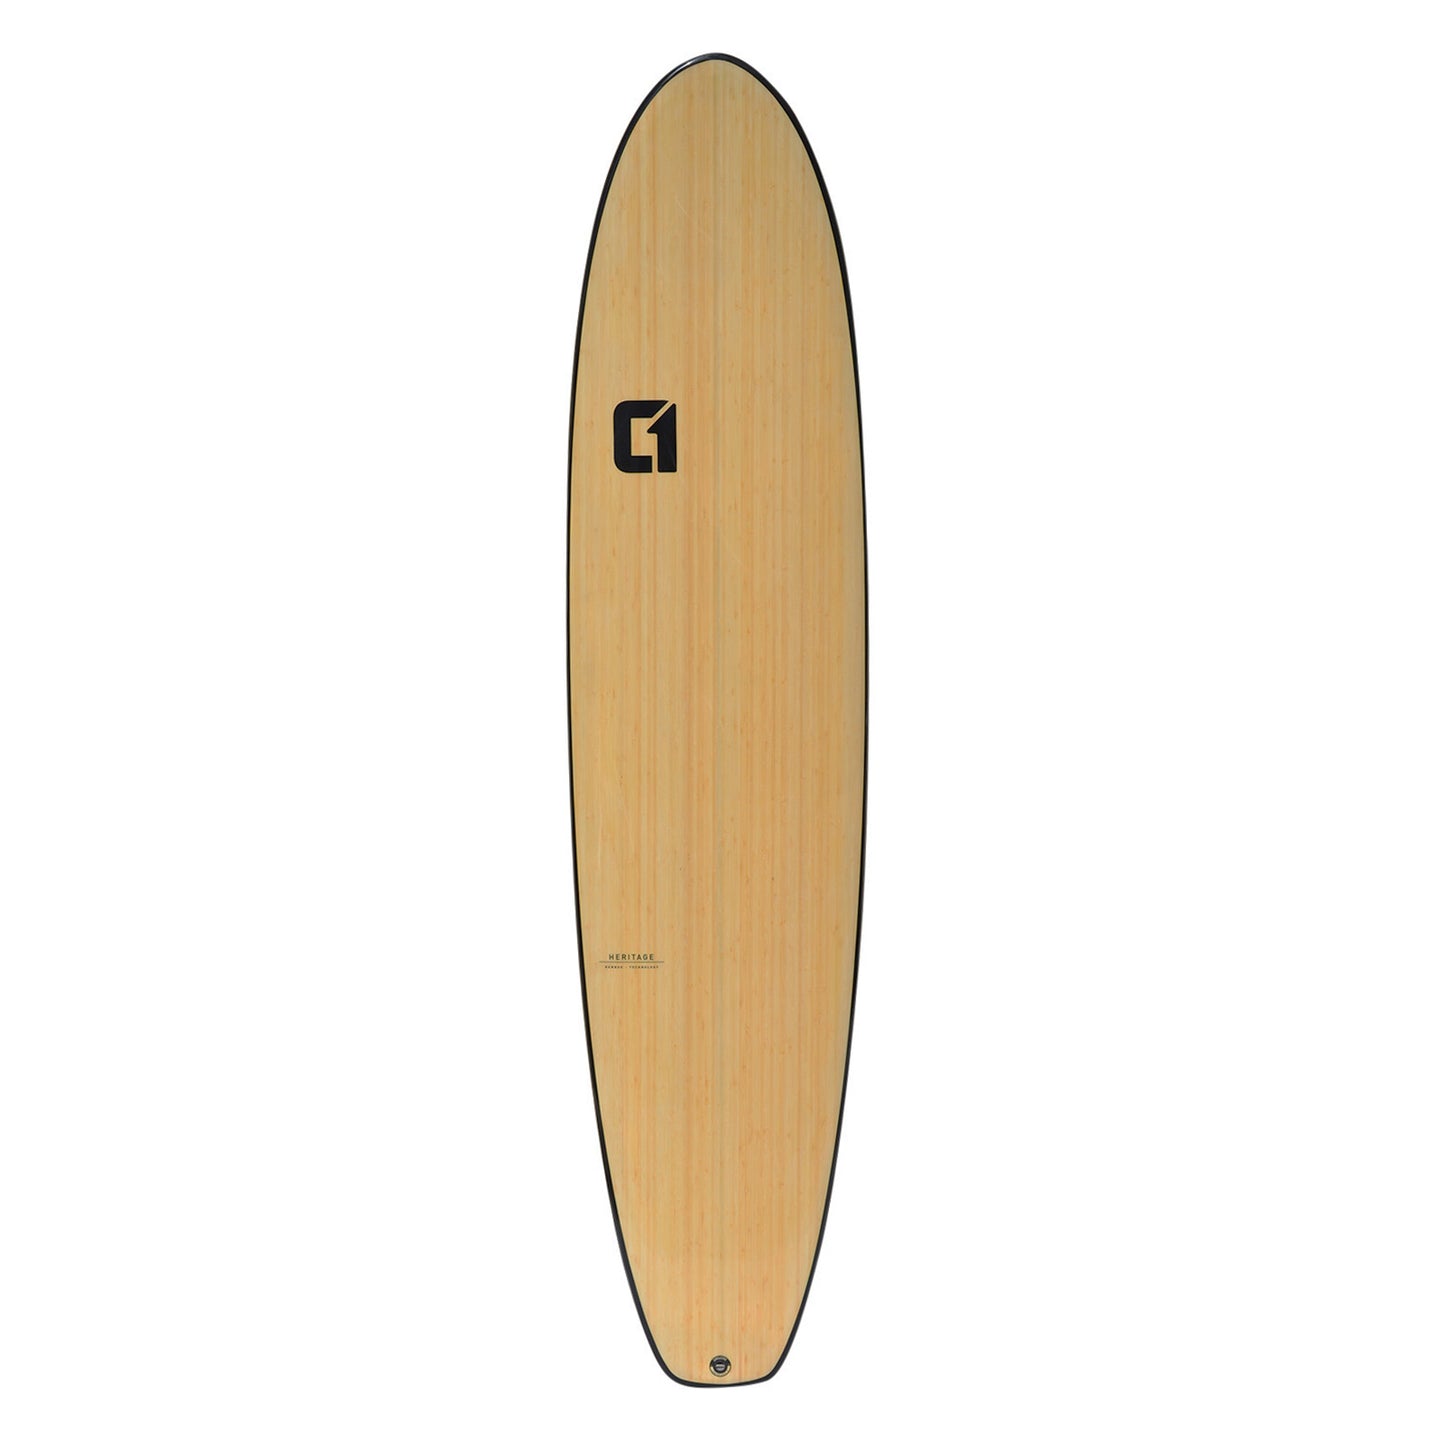 8′ Bamboo Squash Tail Mini Mal Surfboard Package – Includes Bag, Leash, Fins & Wax